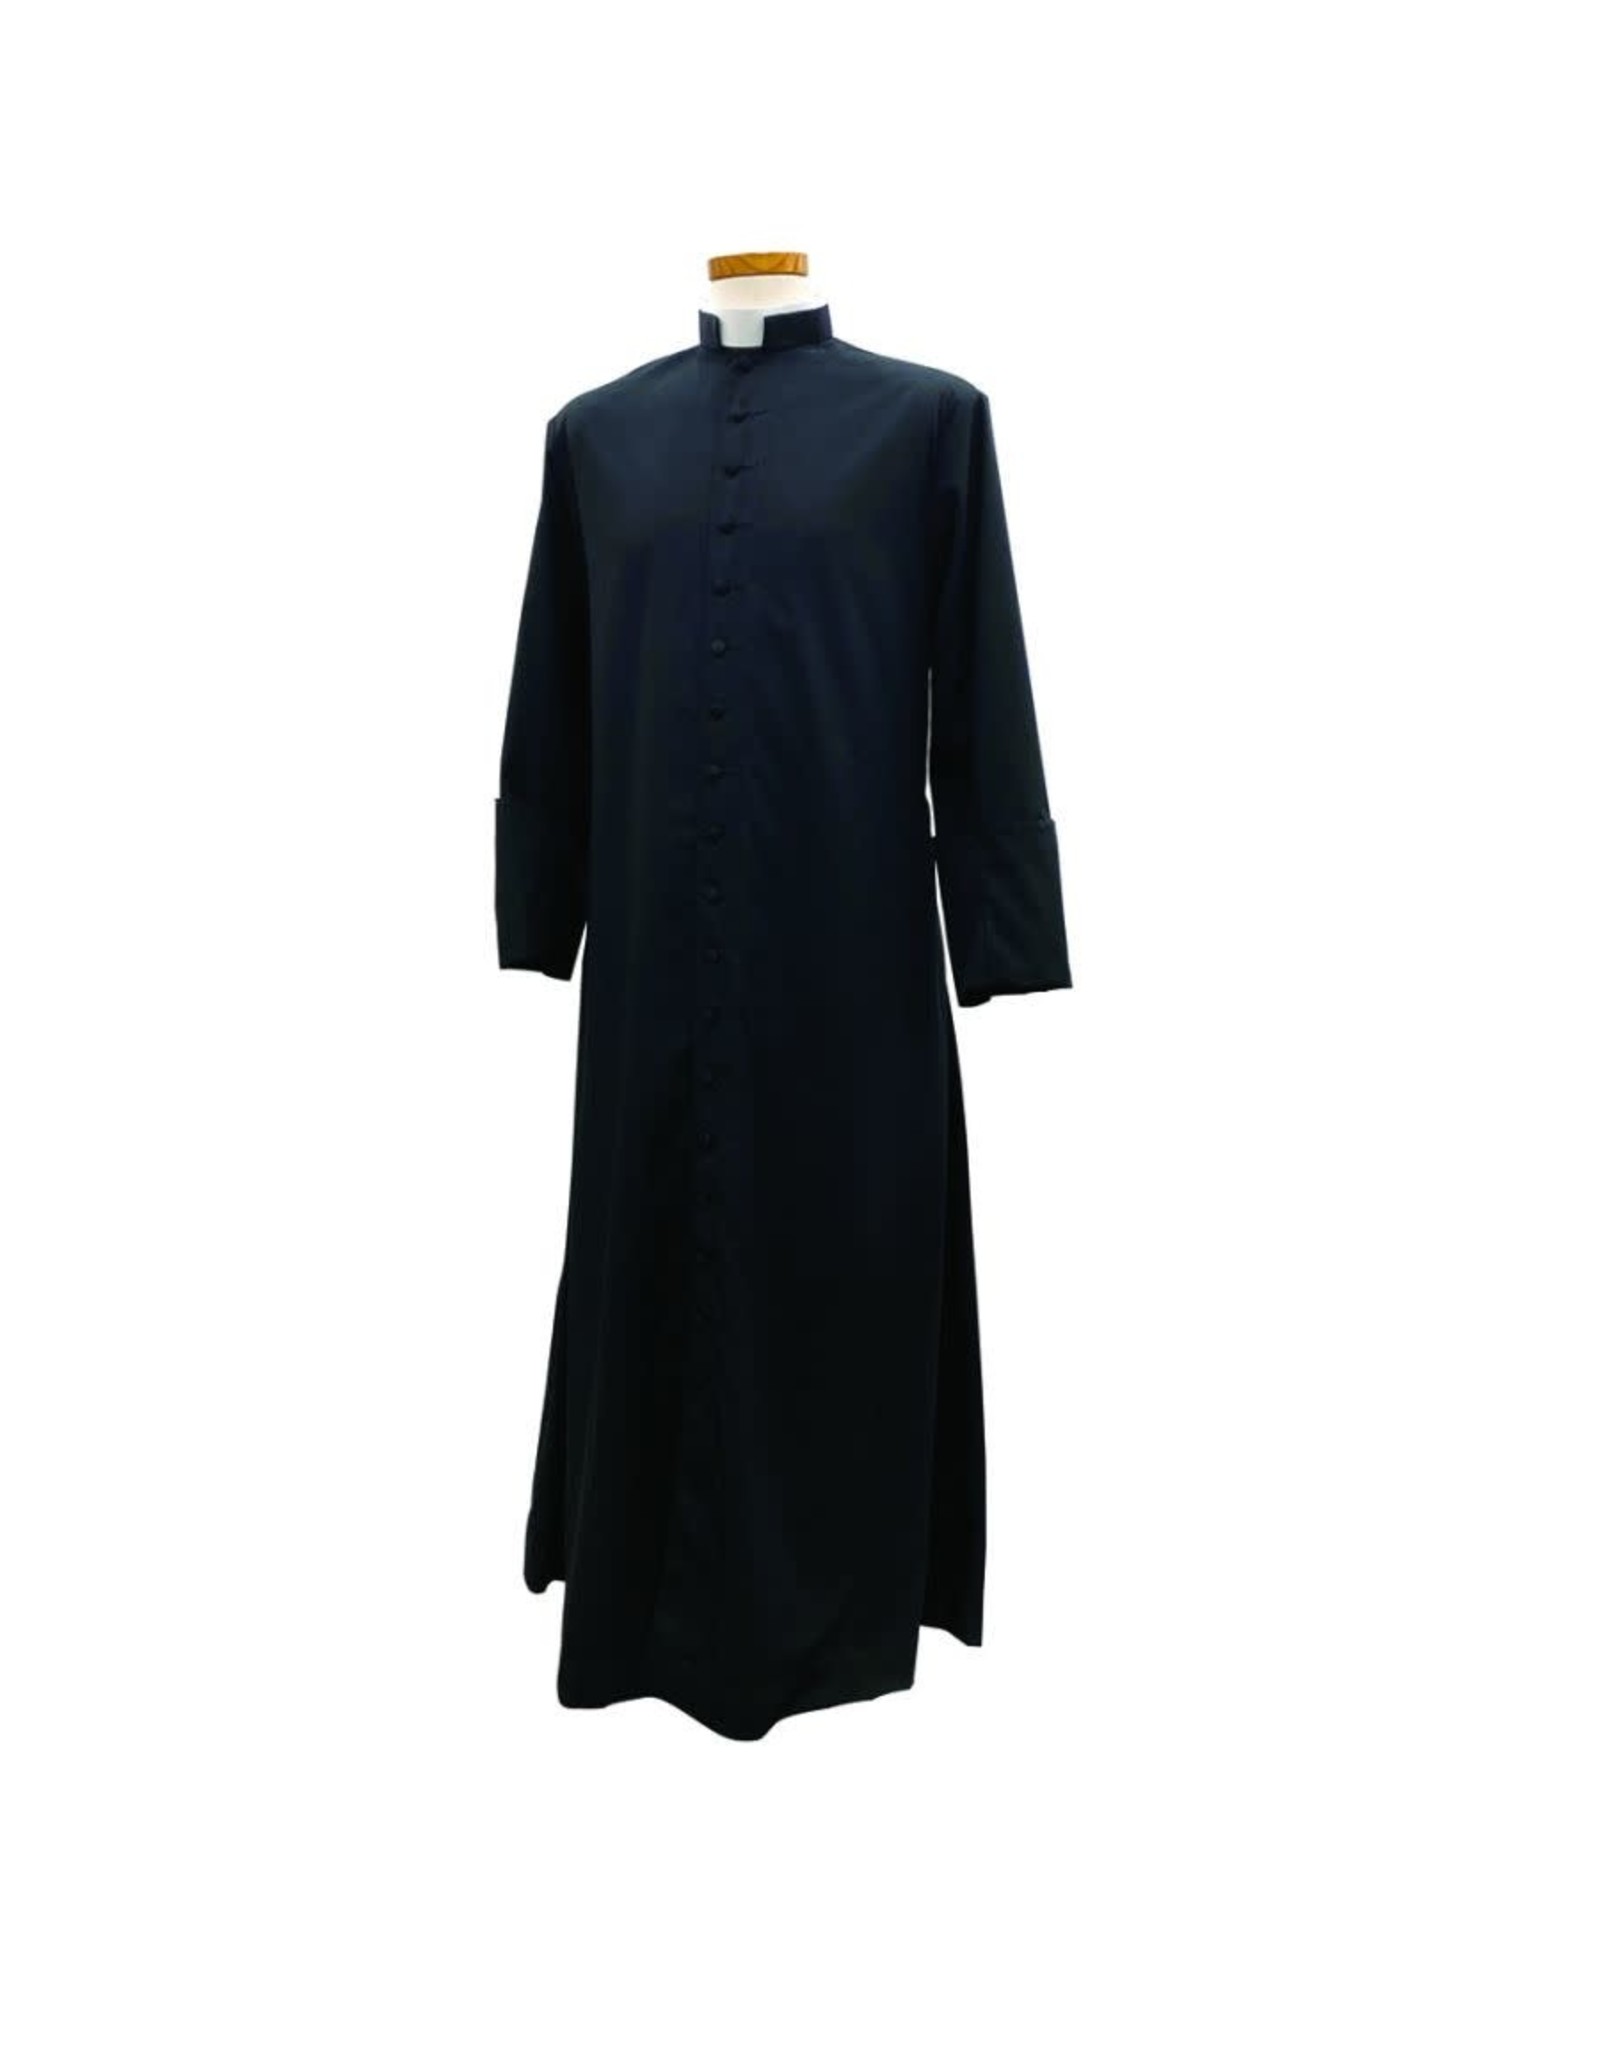 Ecclesiastical Apparel Priest Cassock Poly/Viscose Fabric